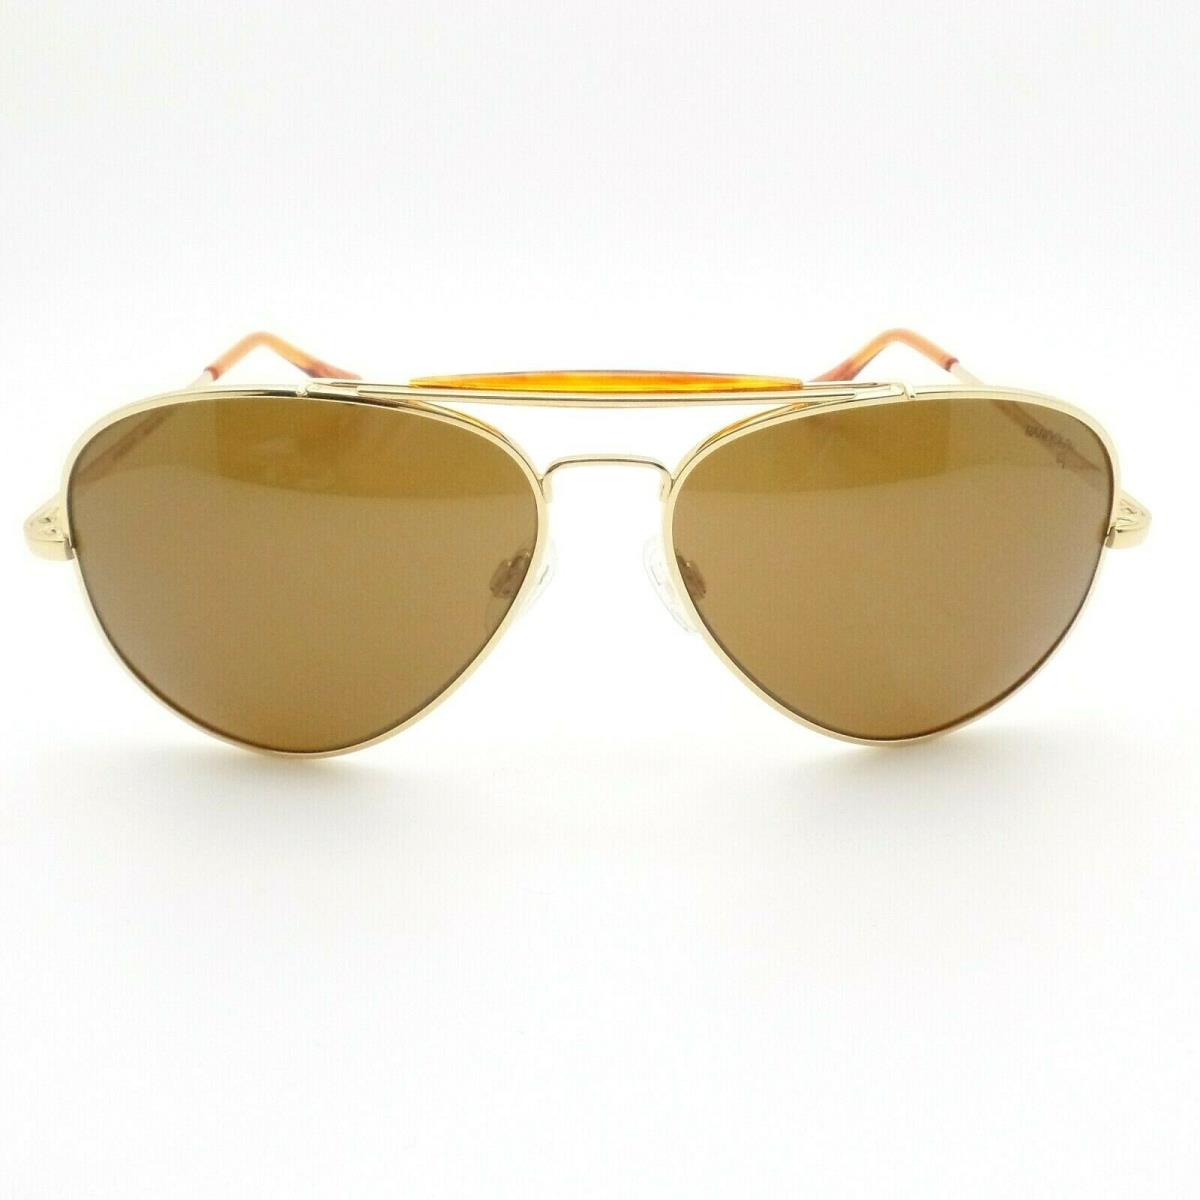 Randolph sunglasses Sportsman - 23k Gold Frame, American Tan Lens